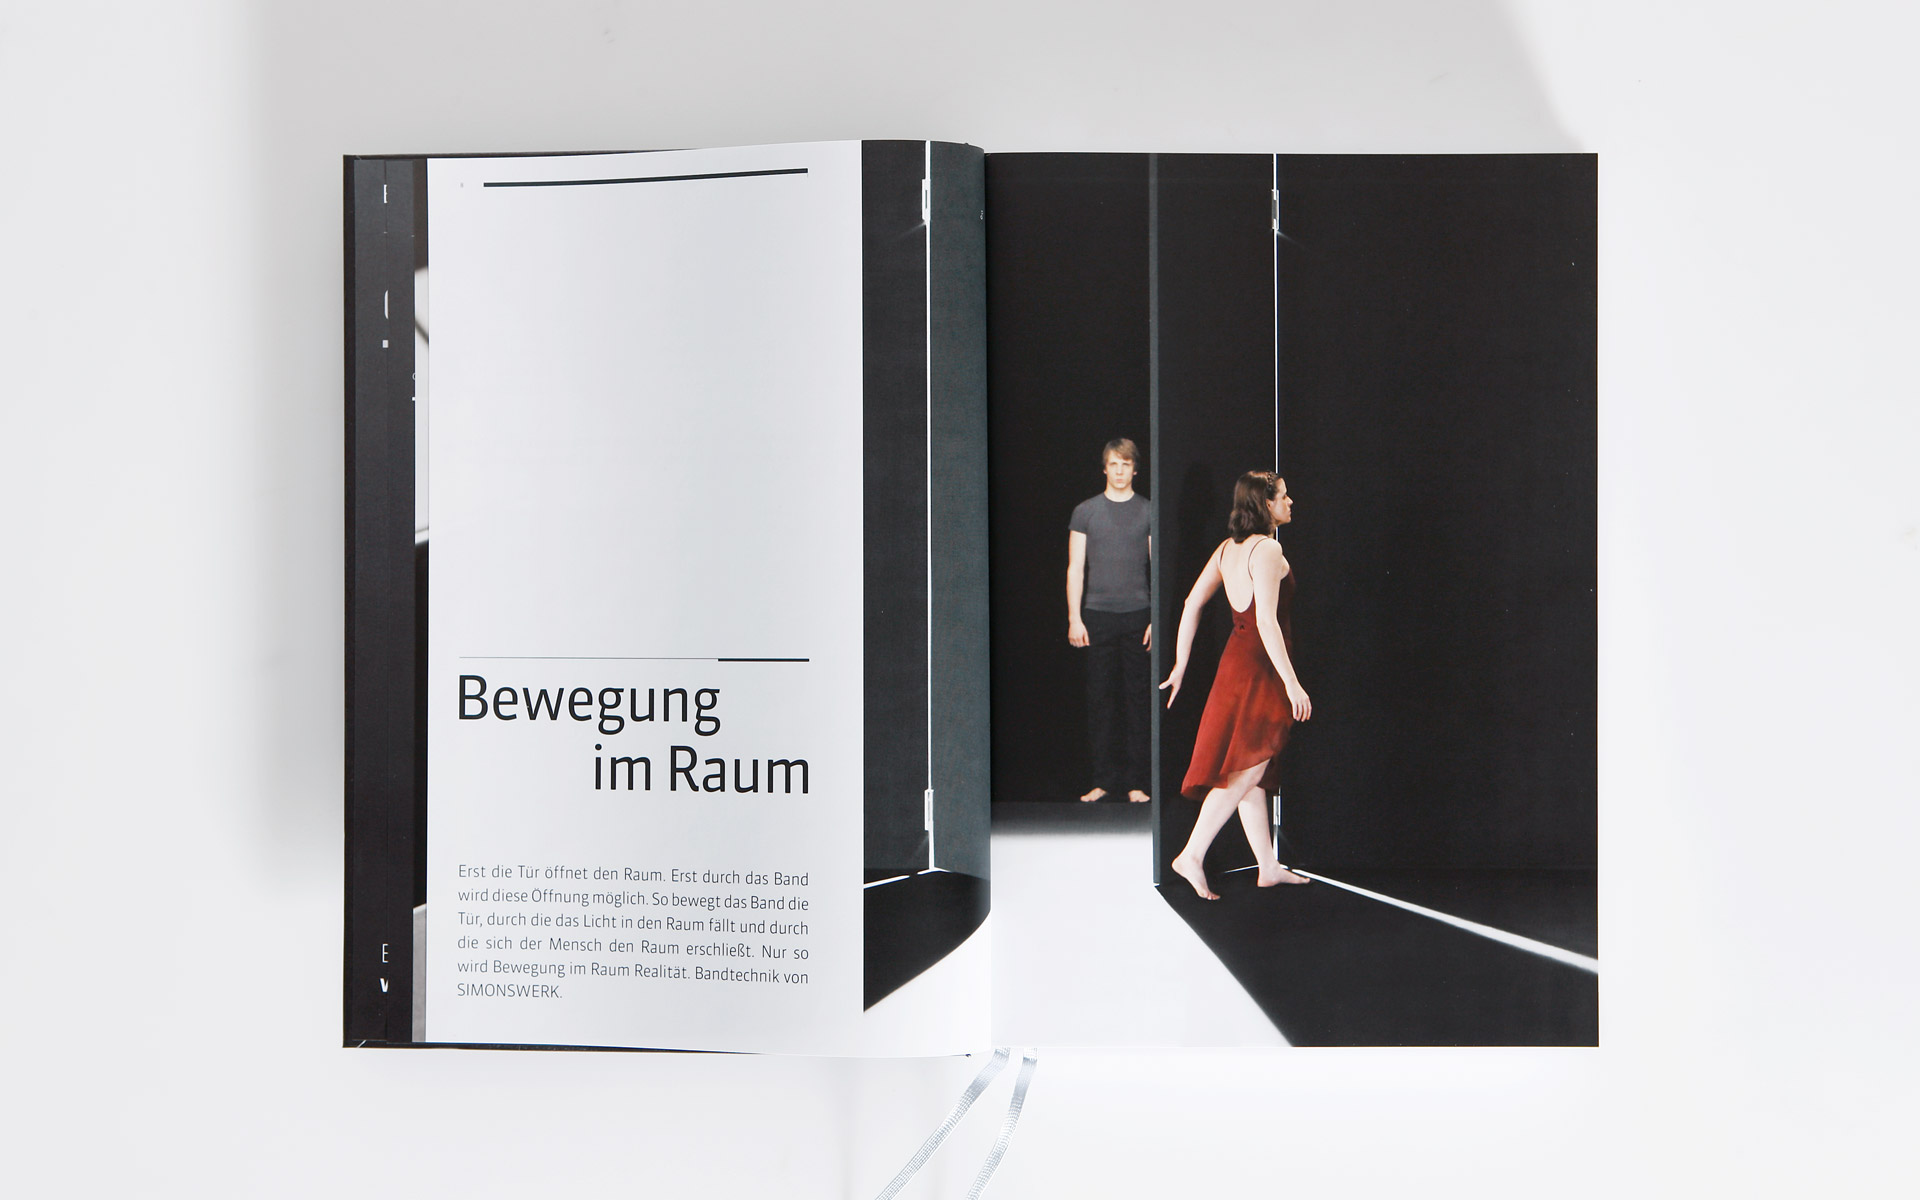 Simonswerk Kompendium 2012, Handbuch, Doppelseite, Image